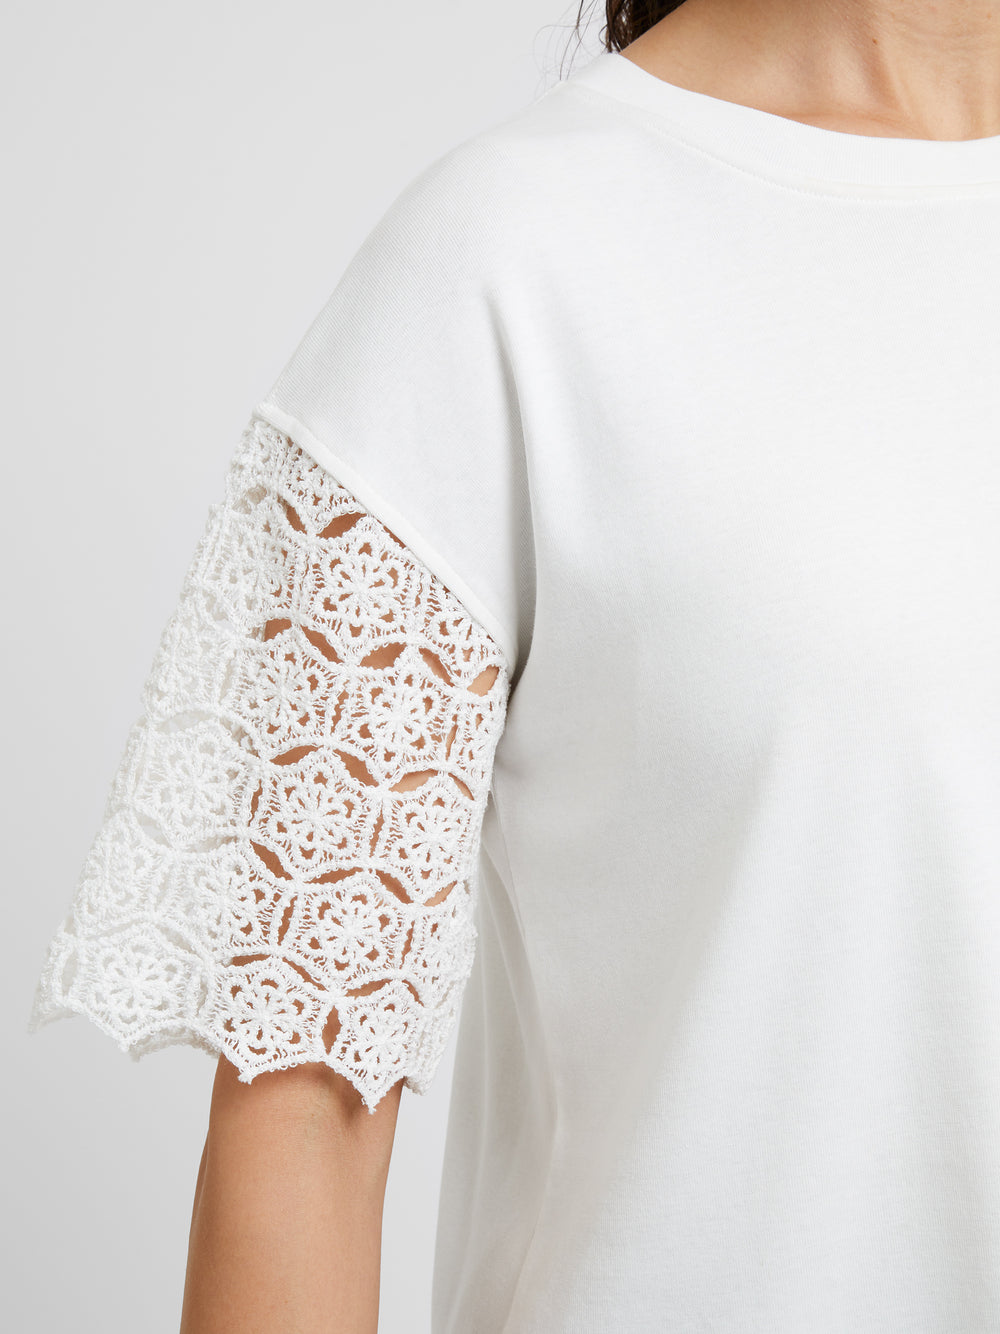 Kuhl Organic Cotton Tee Women's Size Large White Crochet Lace Knit Short  Sleeve